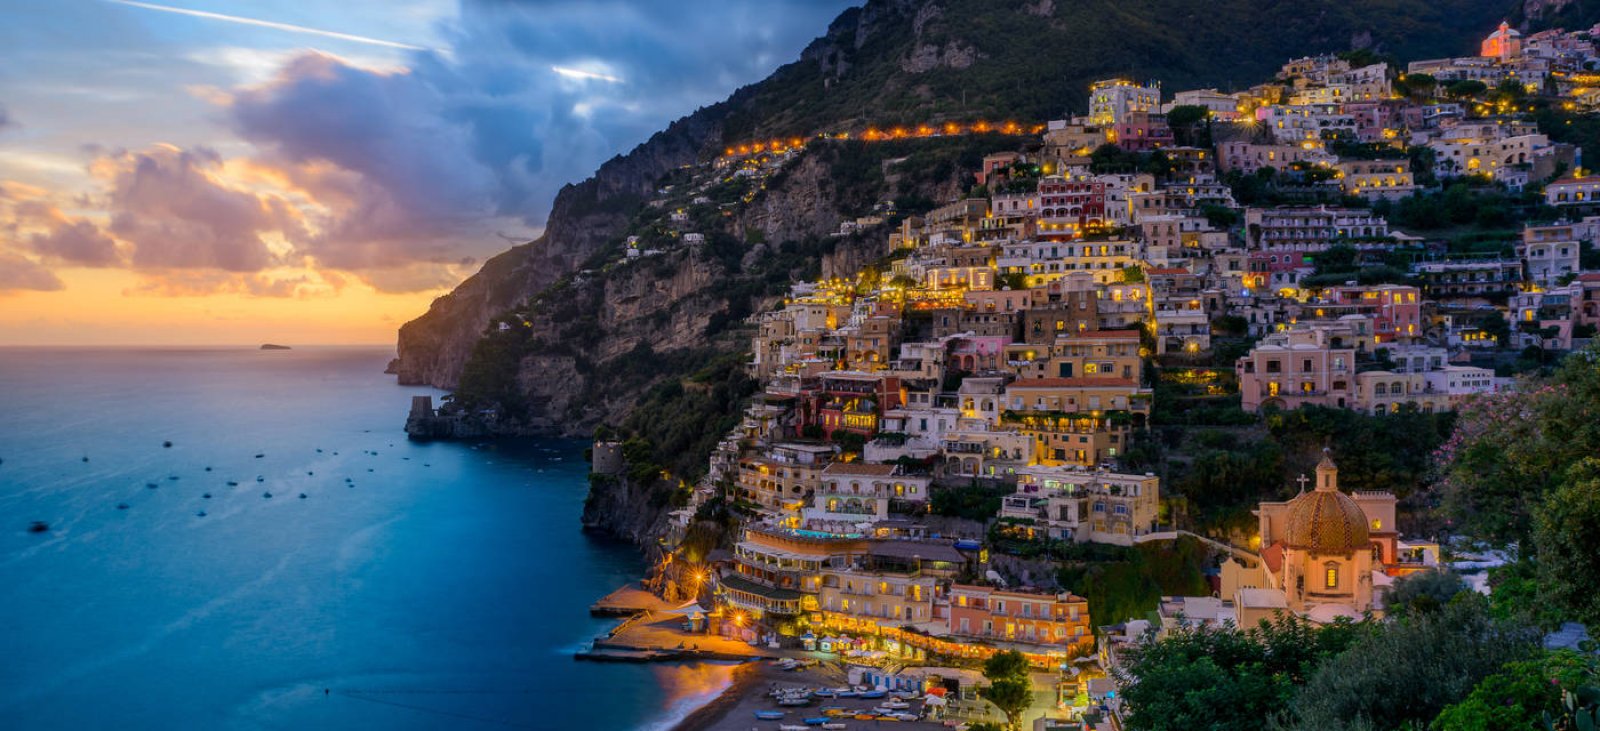 Capri, Ischia, Procida and the Sorrentine Peninsula